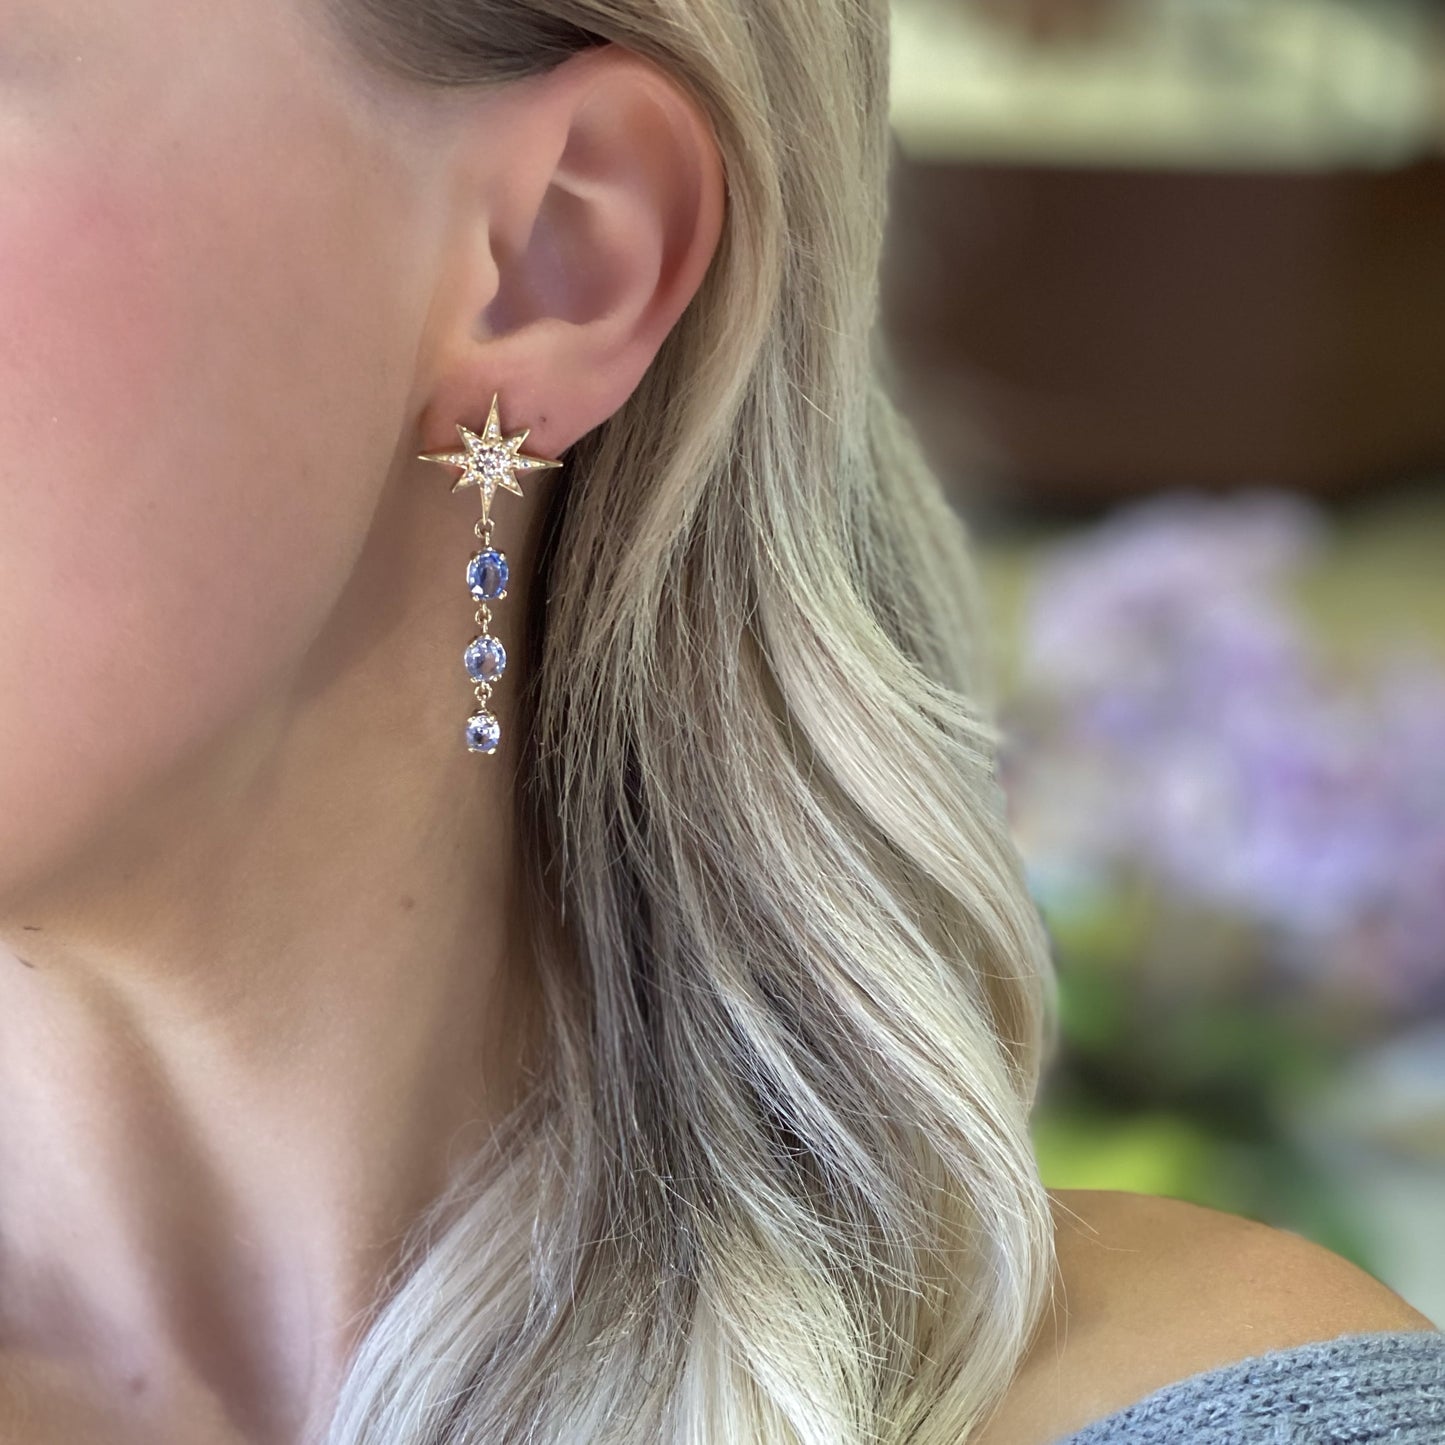 Starry Night Sapphire and Diamond Earrings